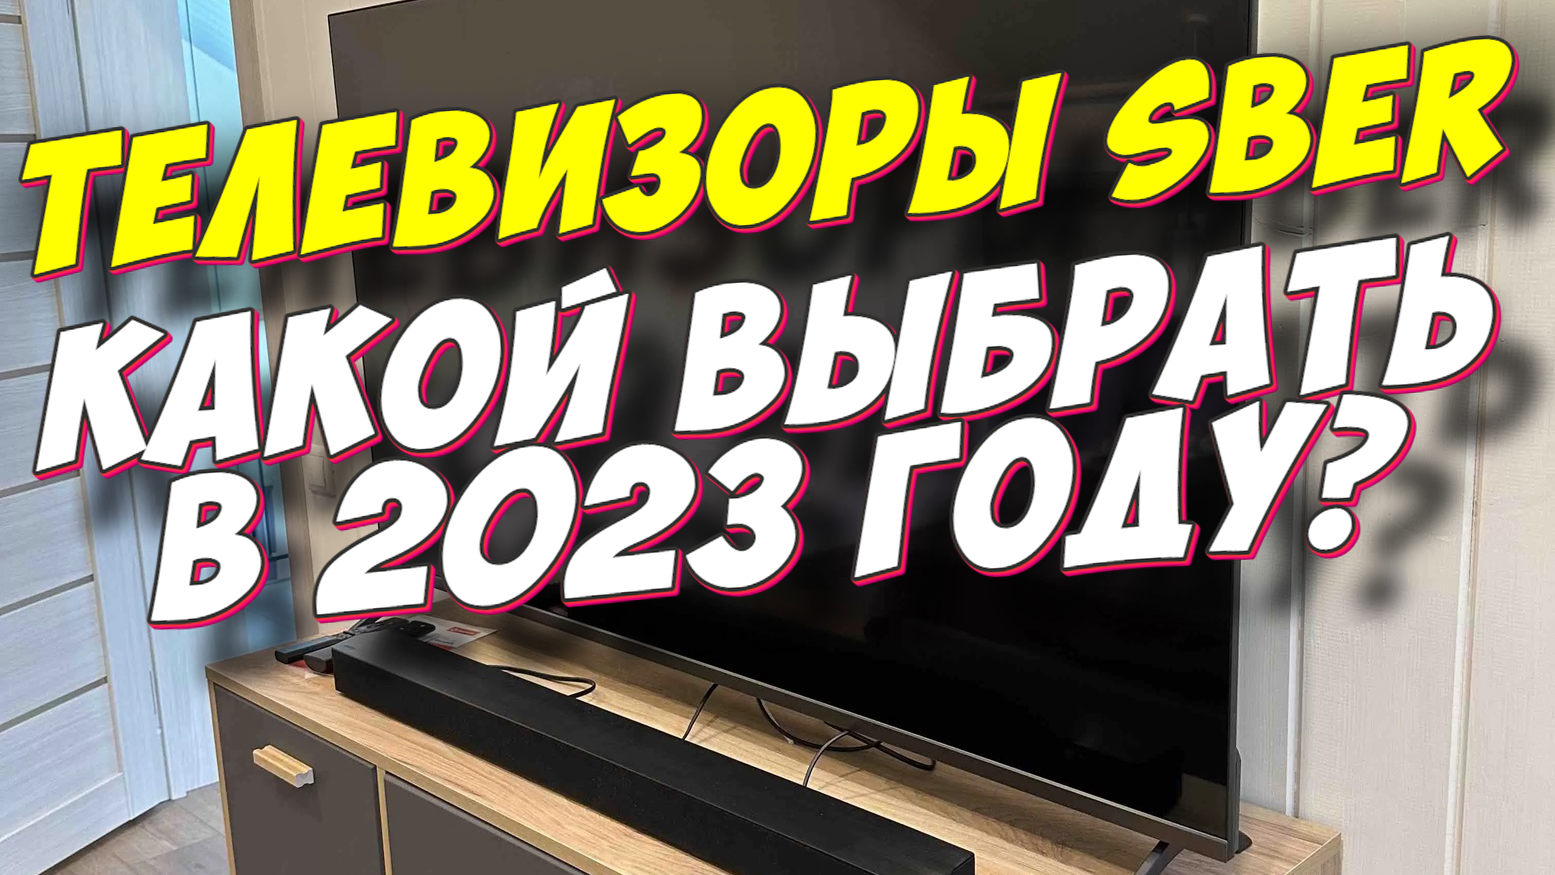 Sdx-55uq5230t. Телевизор Сбер sdx-32h2122b. Sdx-50uq5230t обзор.